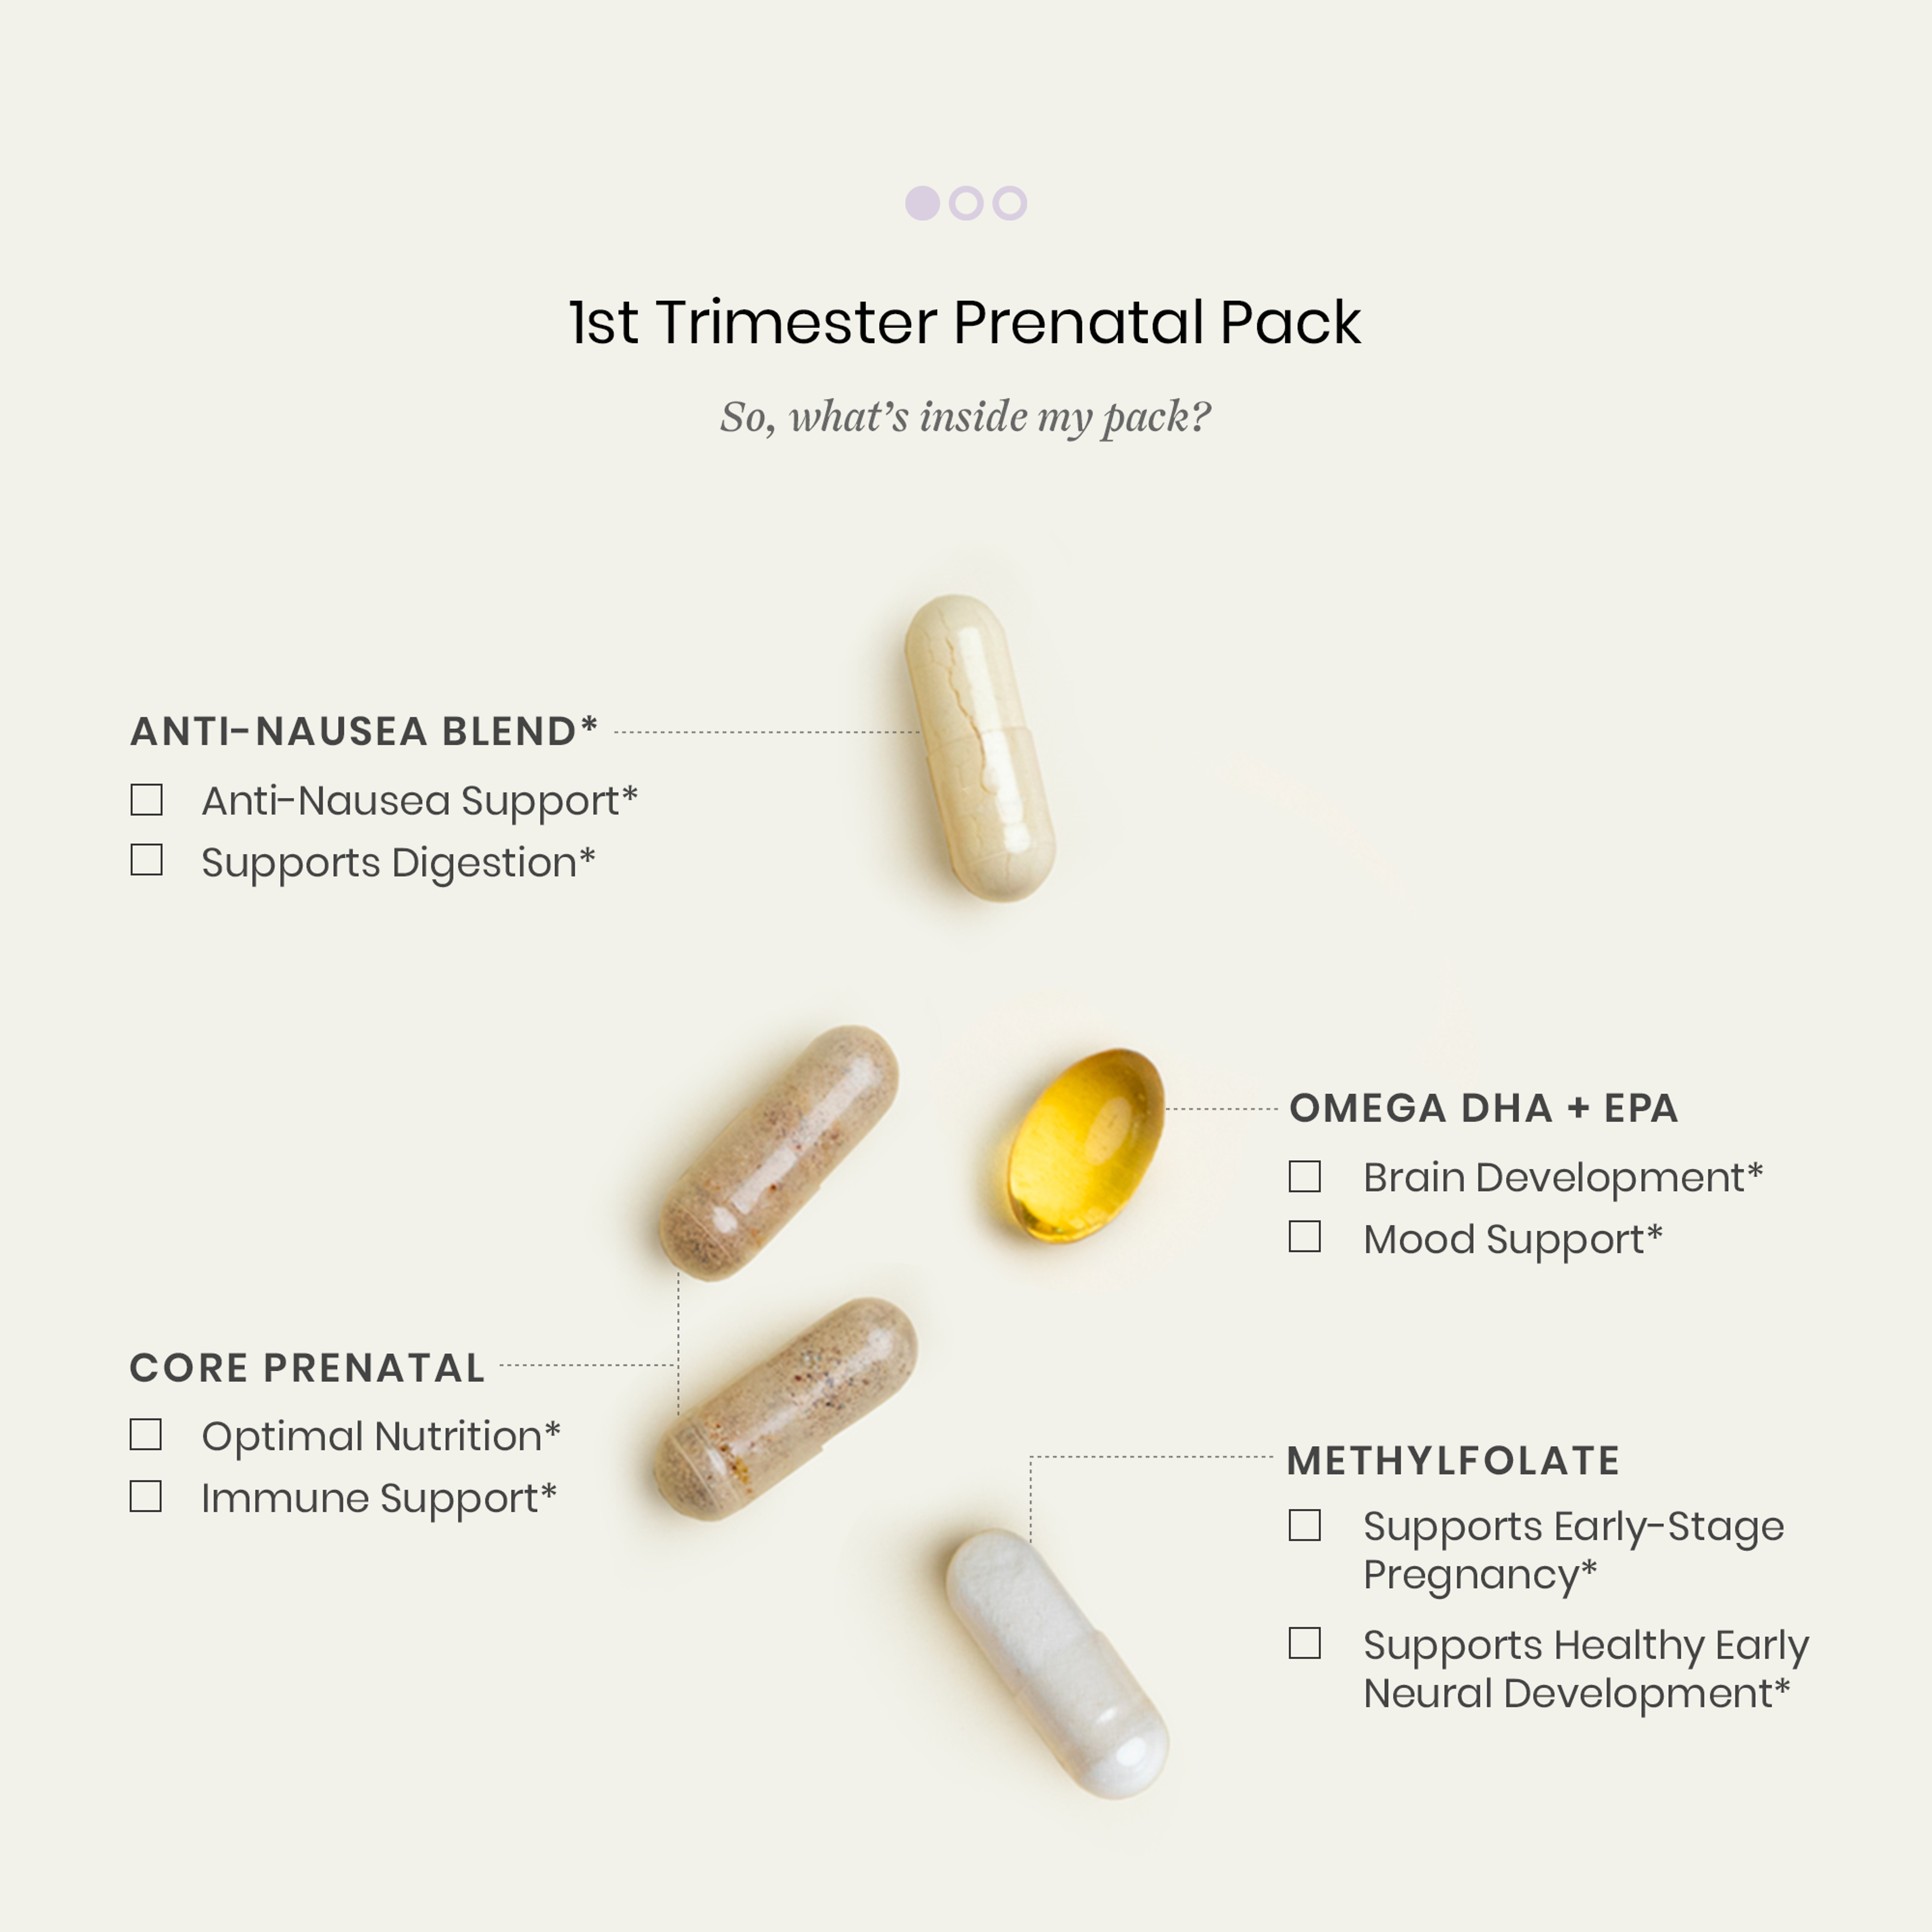 1st Trimester Prenatal Pack